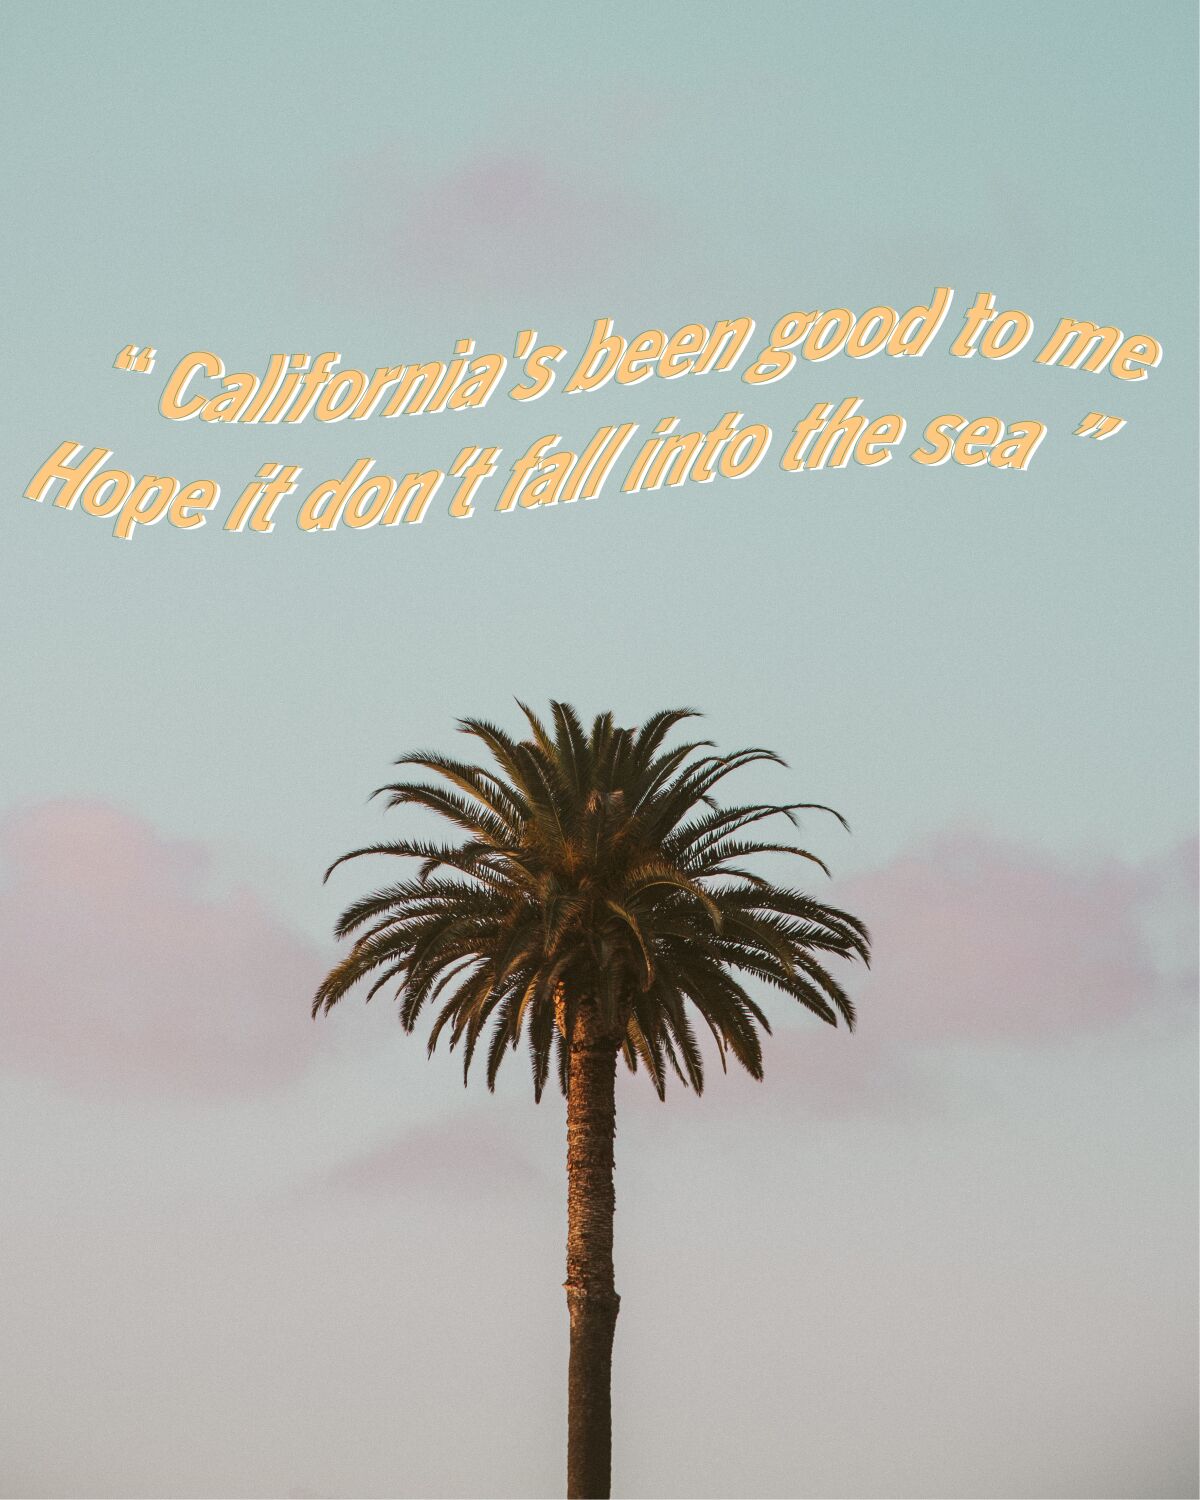 Tom Petty’s “California” lyrics and a palm tree